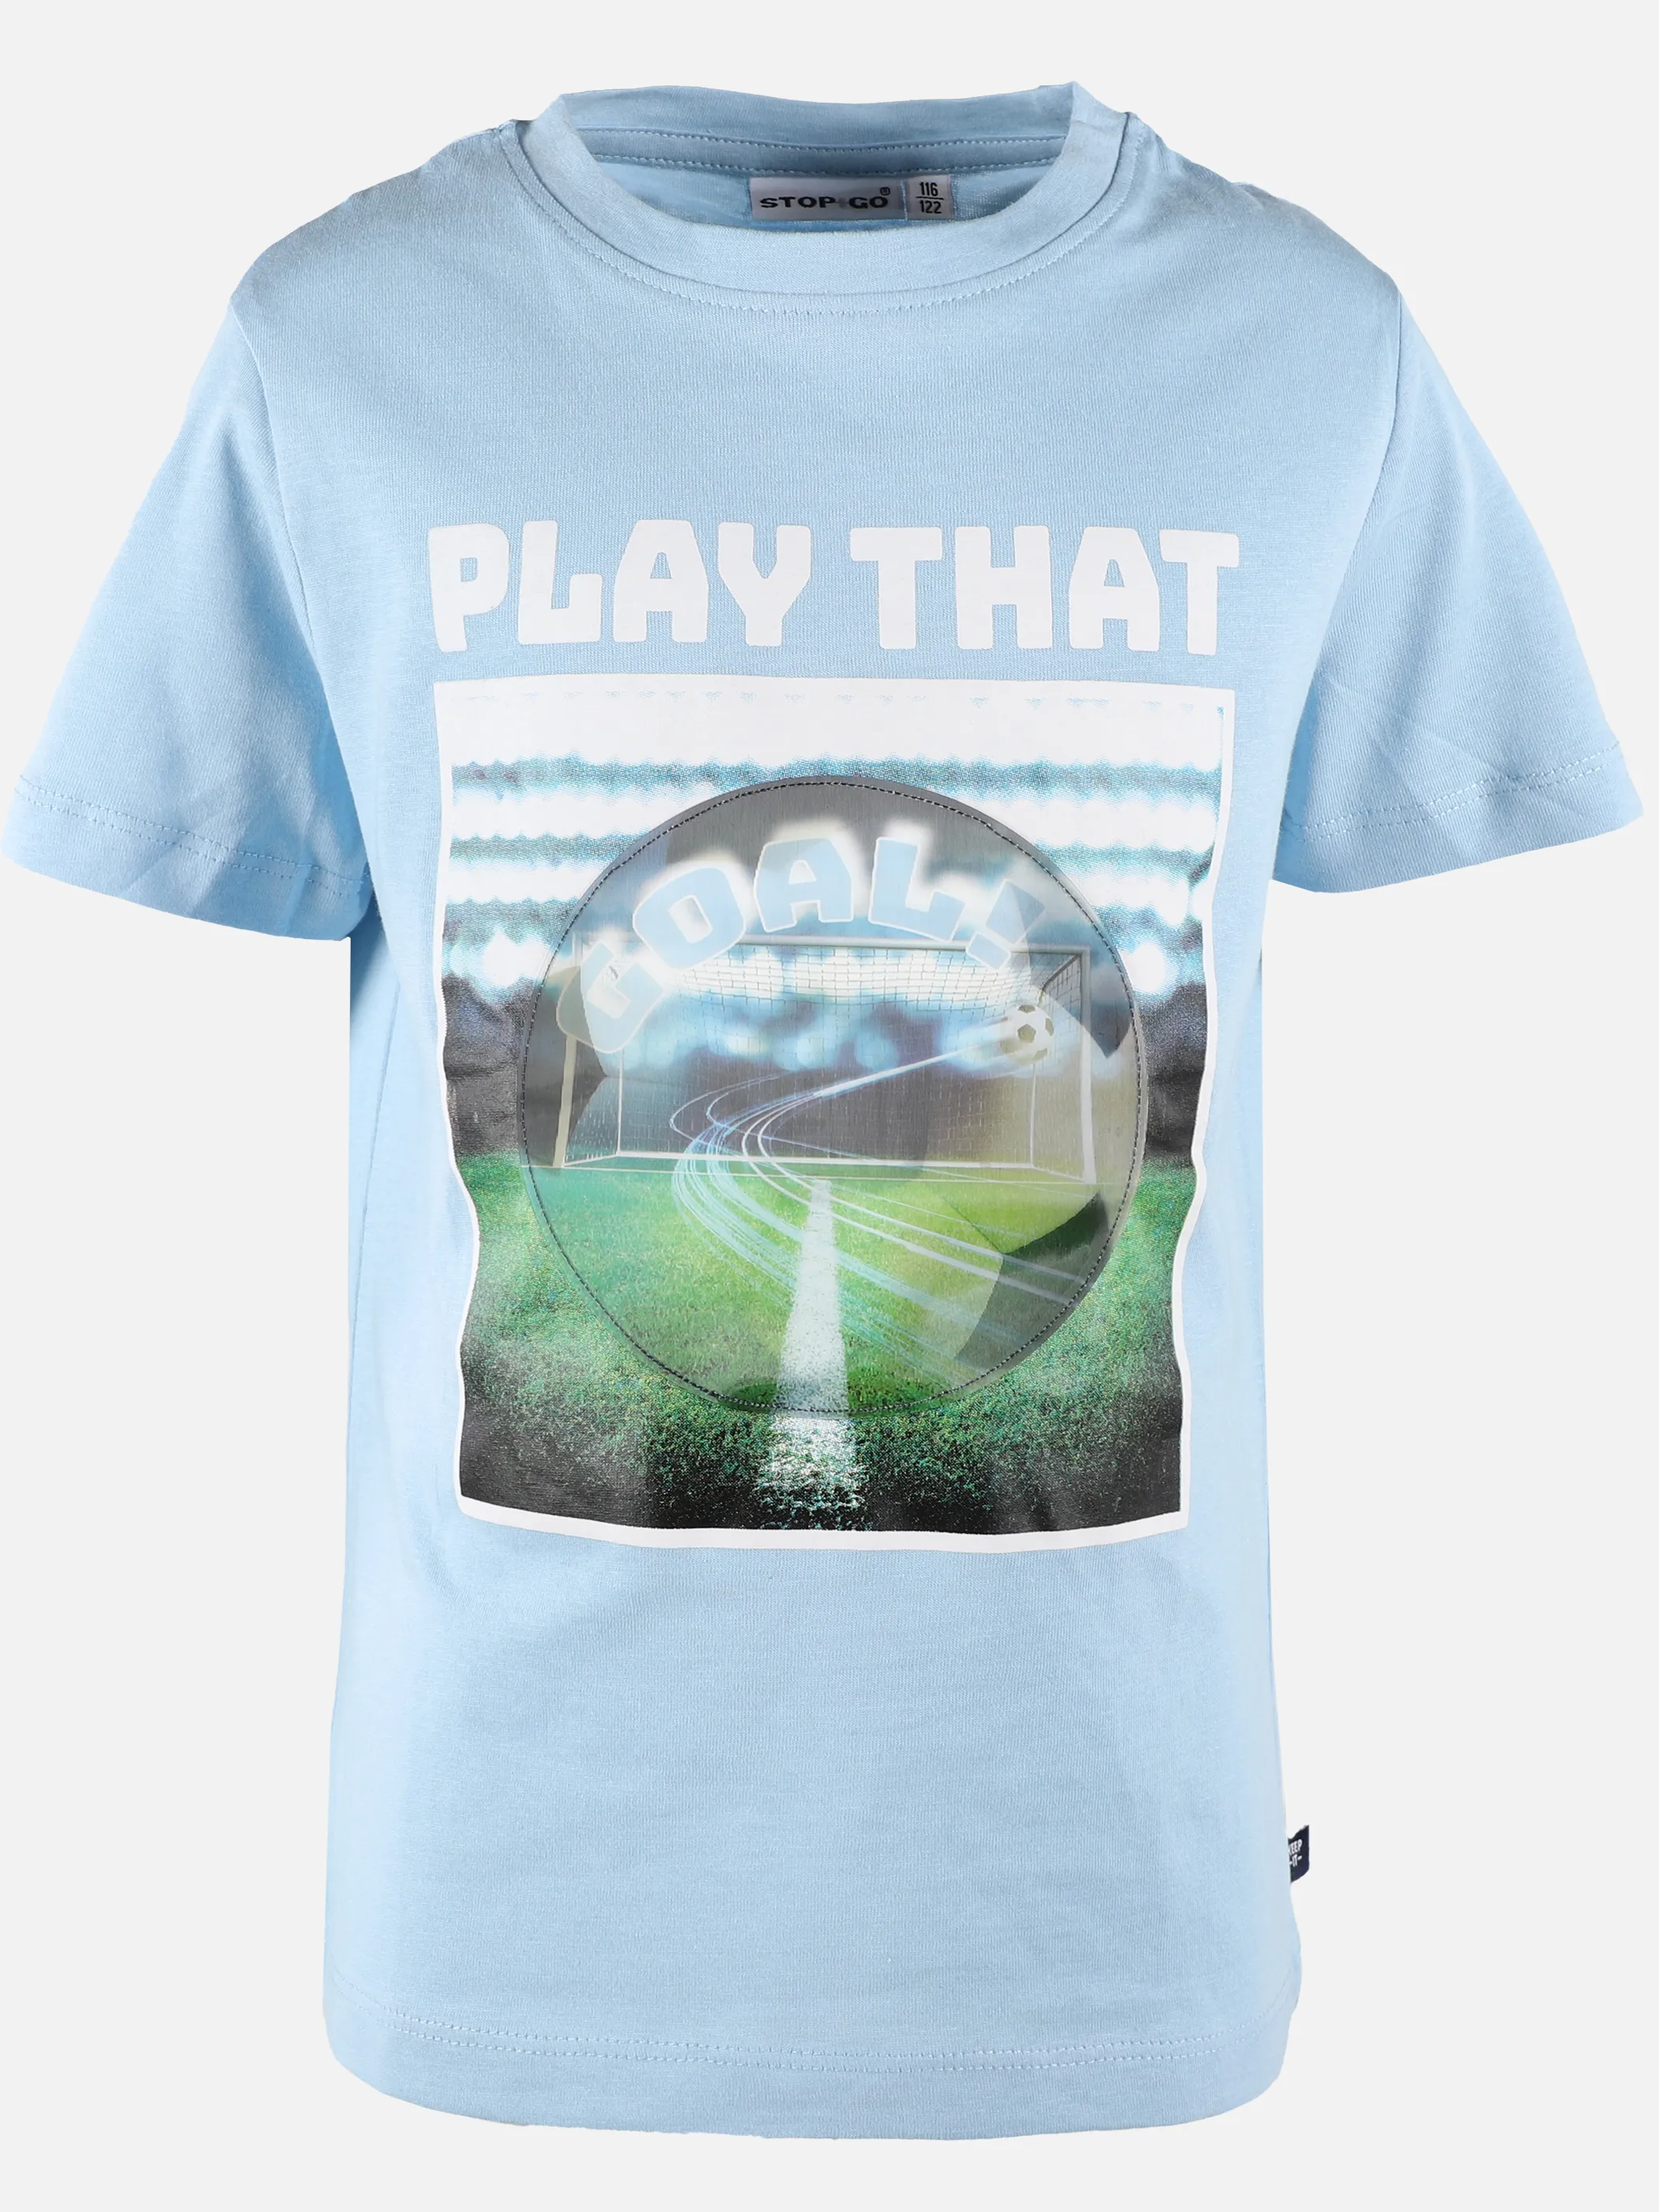 Stop + Go KJ T-Shirt mit Fußballdruck in hellblau Blau 892771 HELLBLAU 1